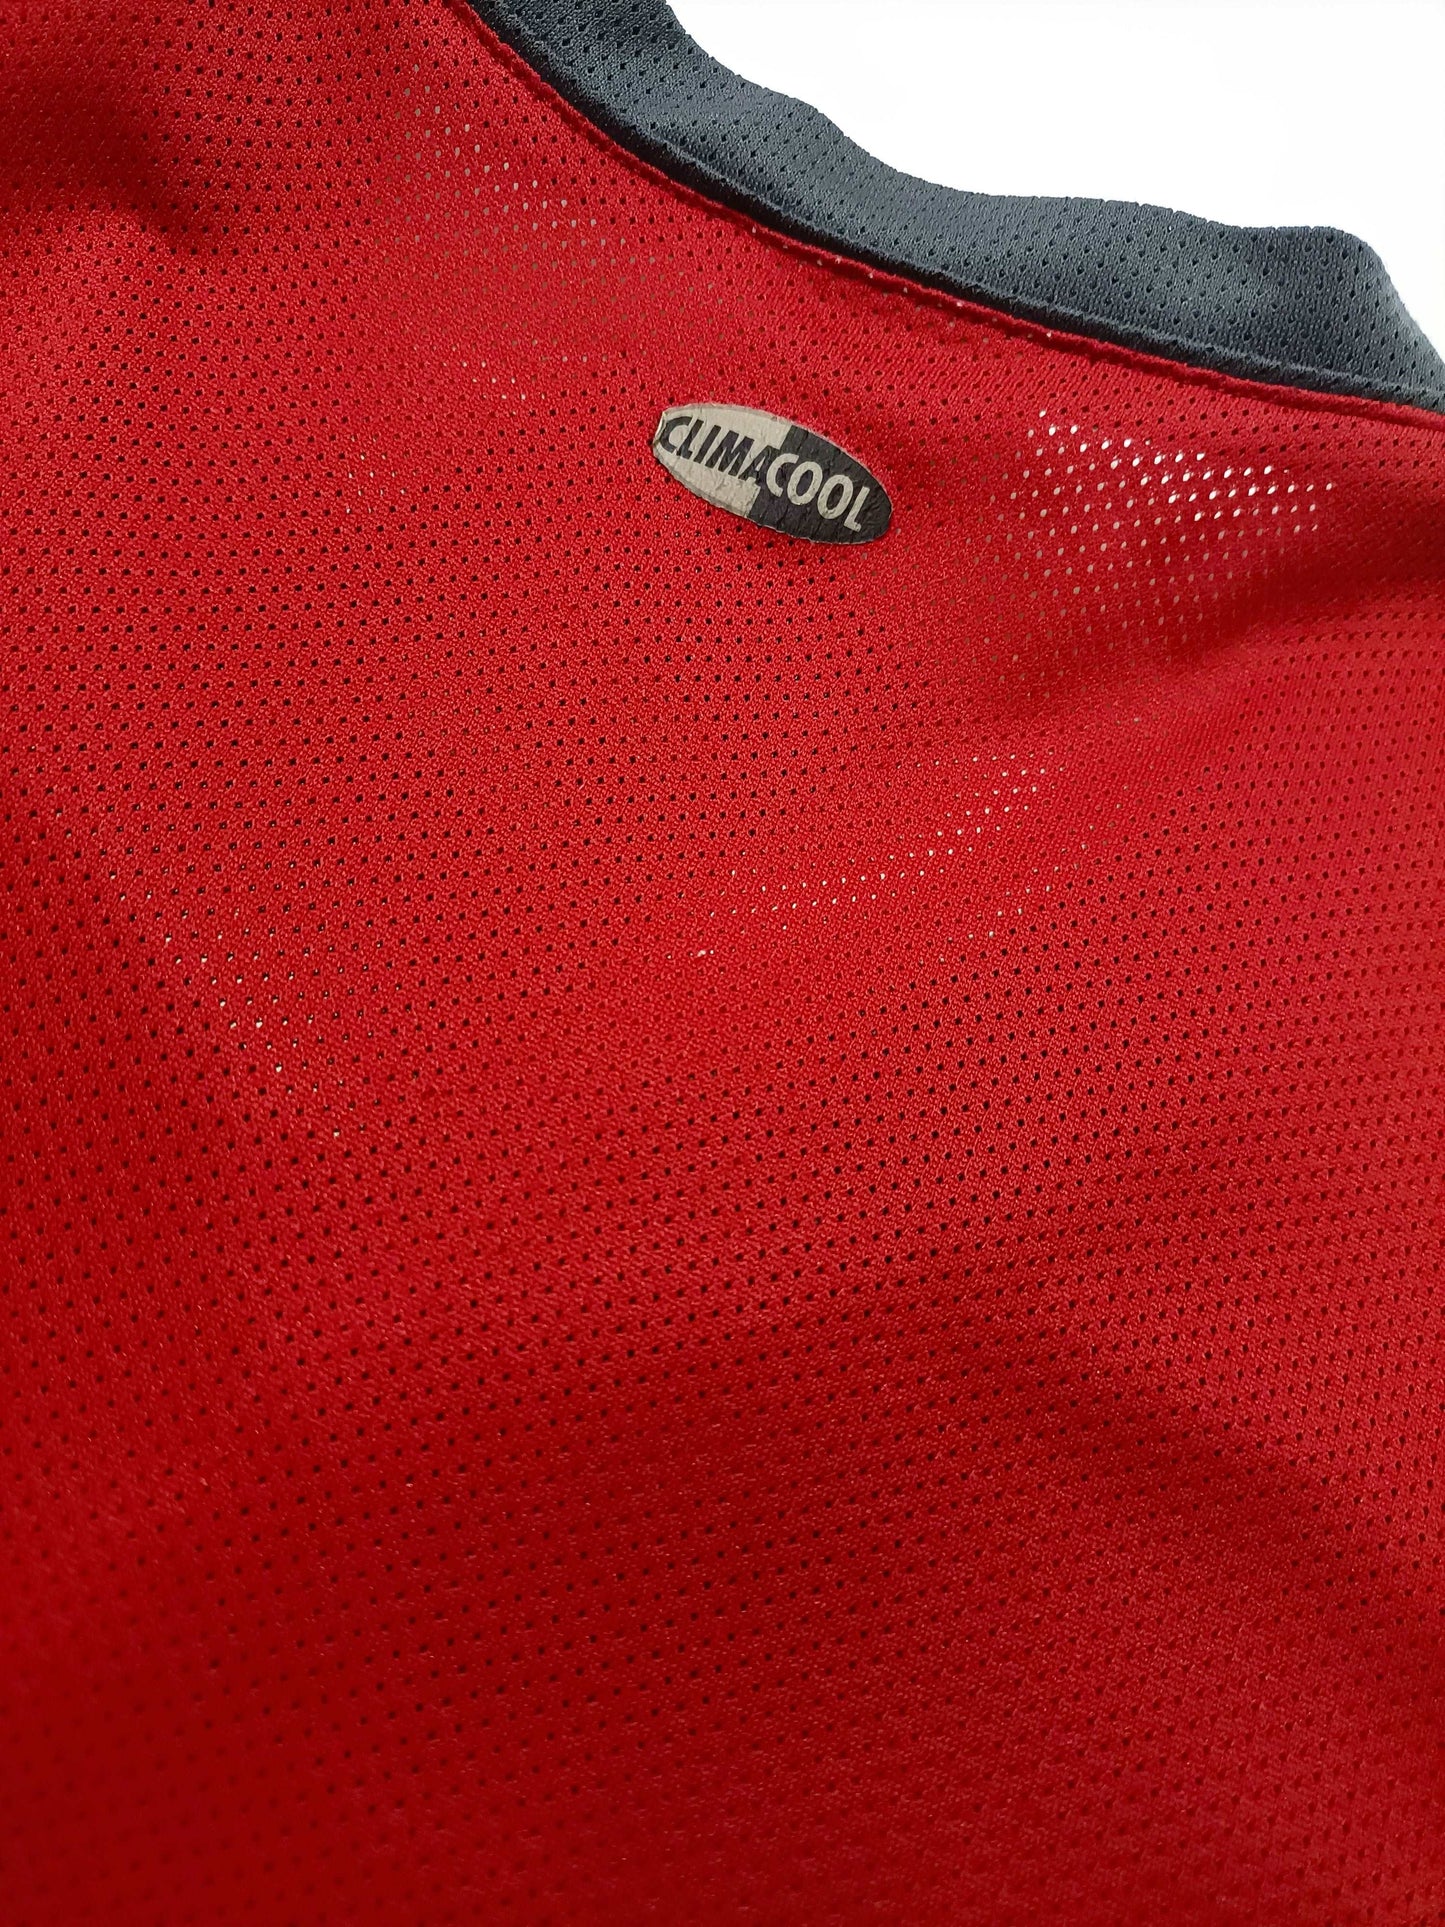 Adidas Canotta Vintage - Adidas Vintage Jersey